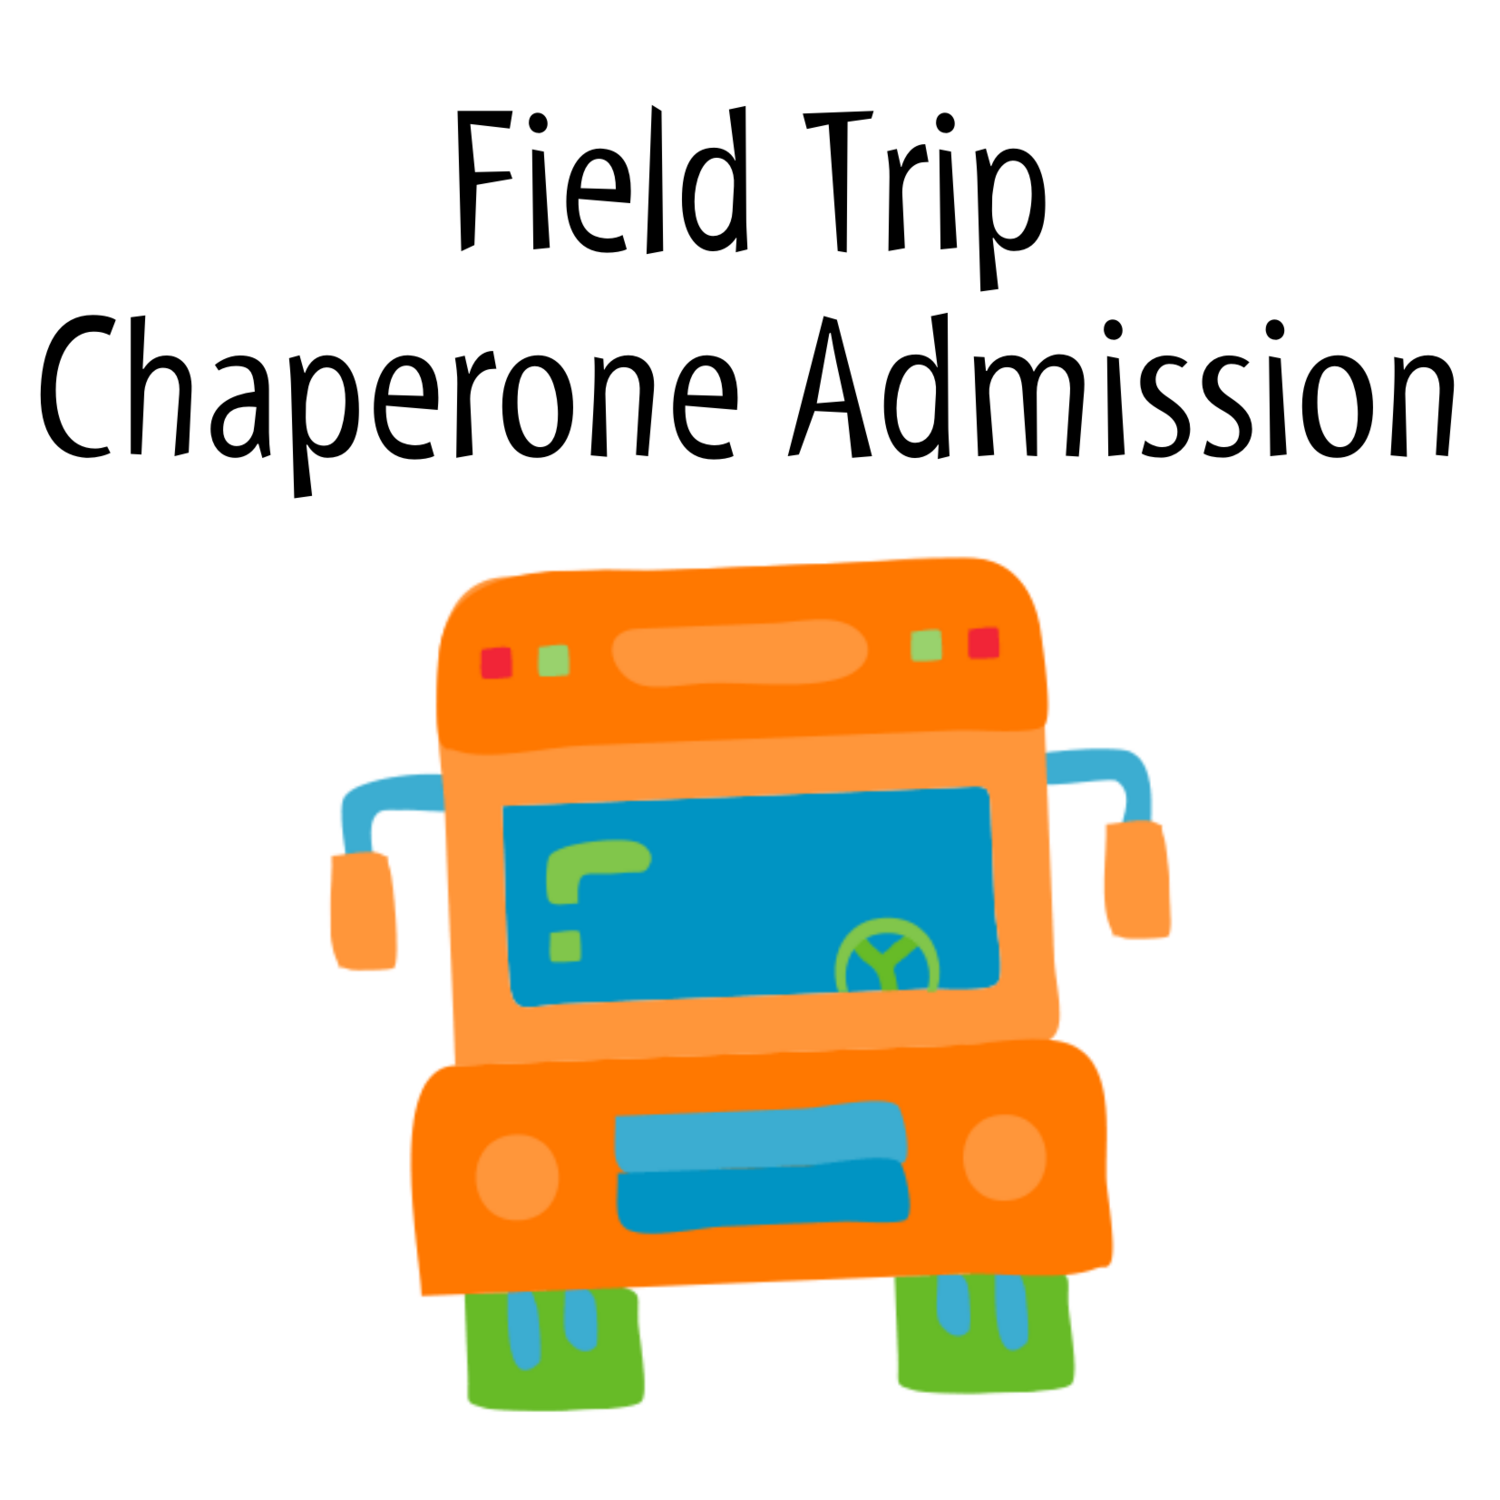 Field Trip Chaperone Admission